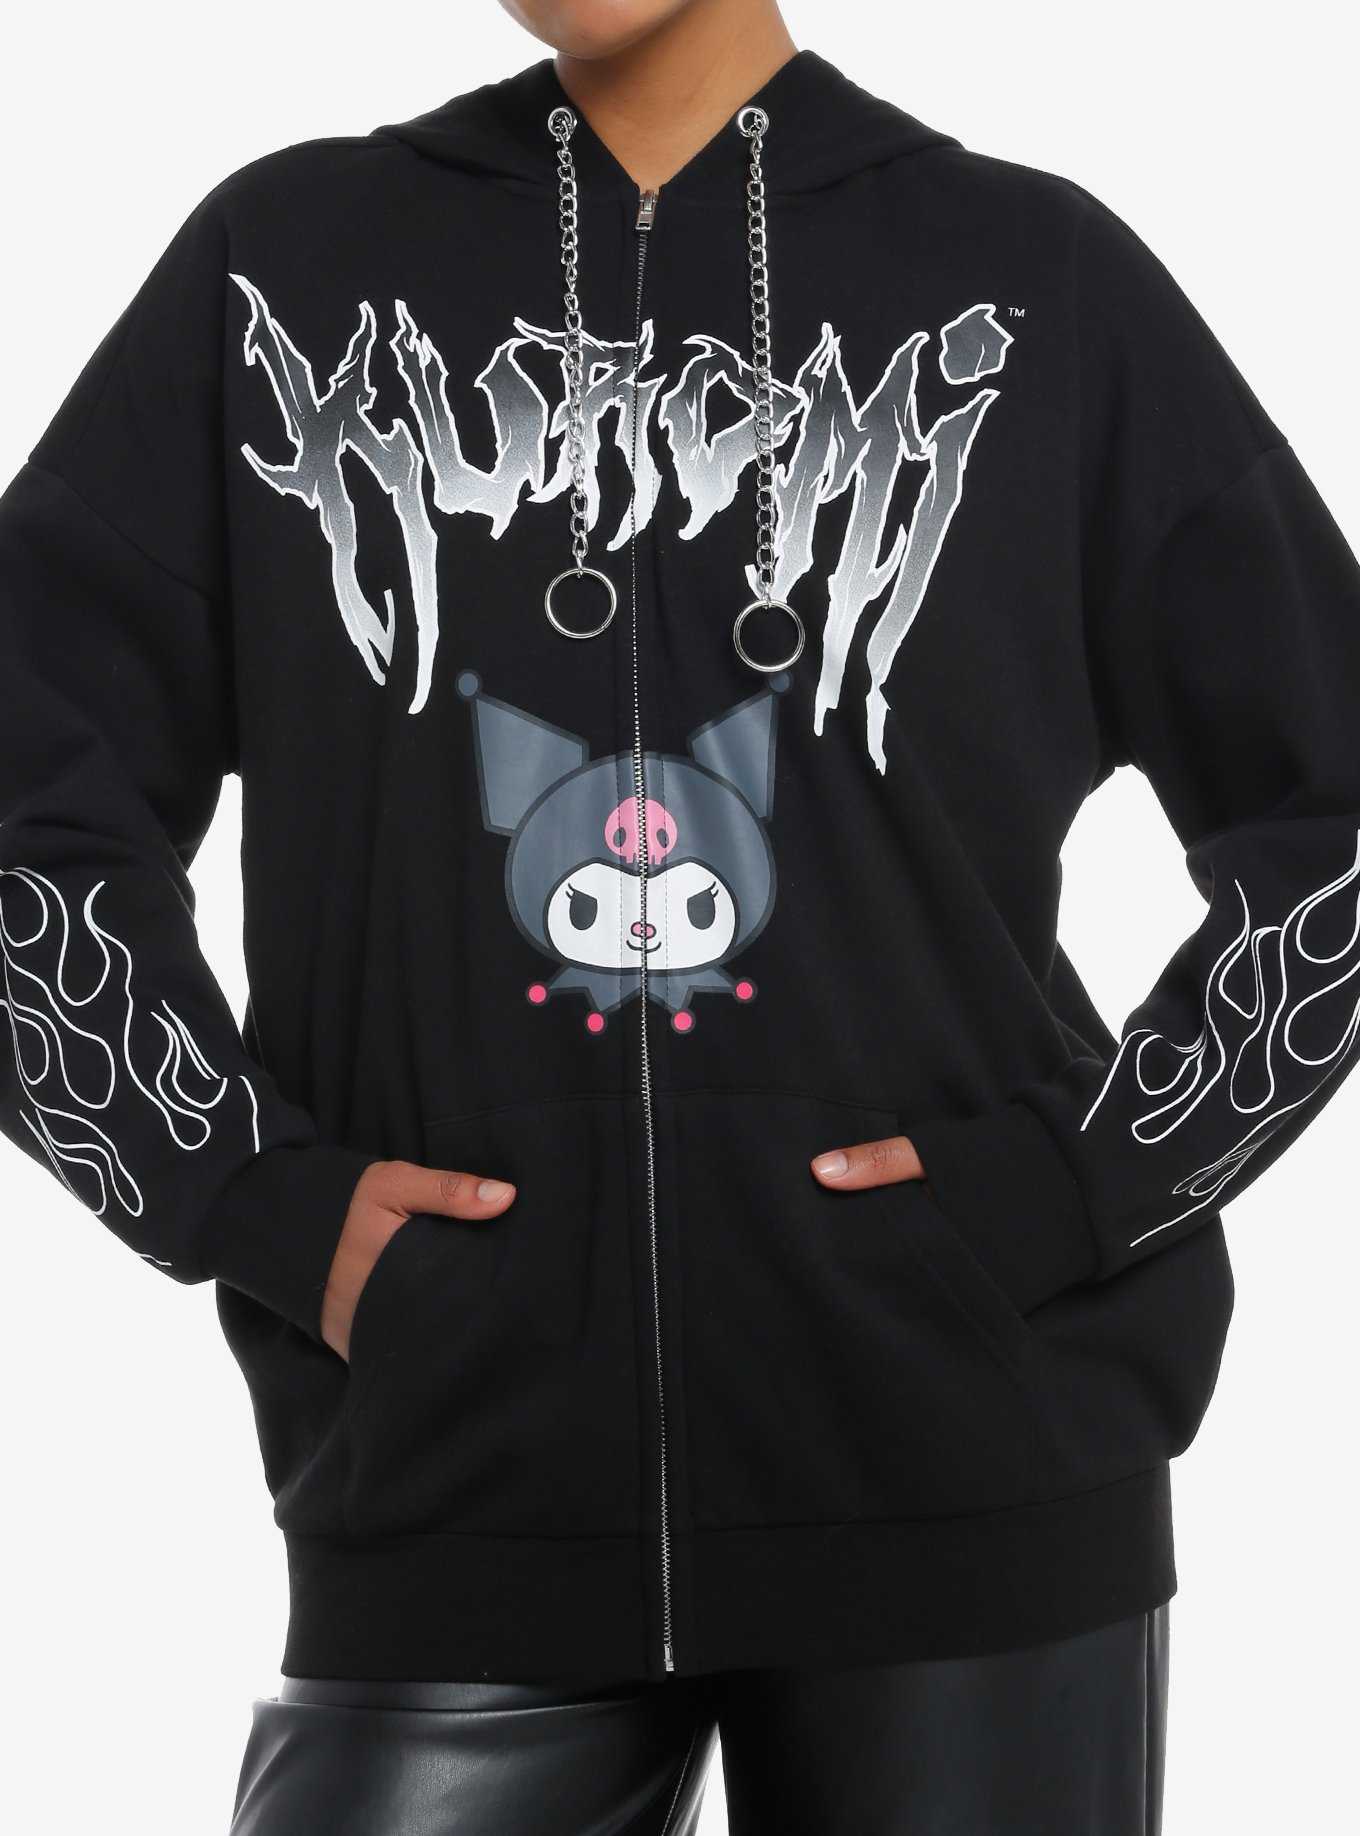 2021 New Outwear Zipper Sweatshirts Emo Alt Clothing Gothic Punk Spider Web  Hooded Women Fairy Grunge Dark Plus size hoodies